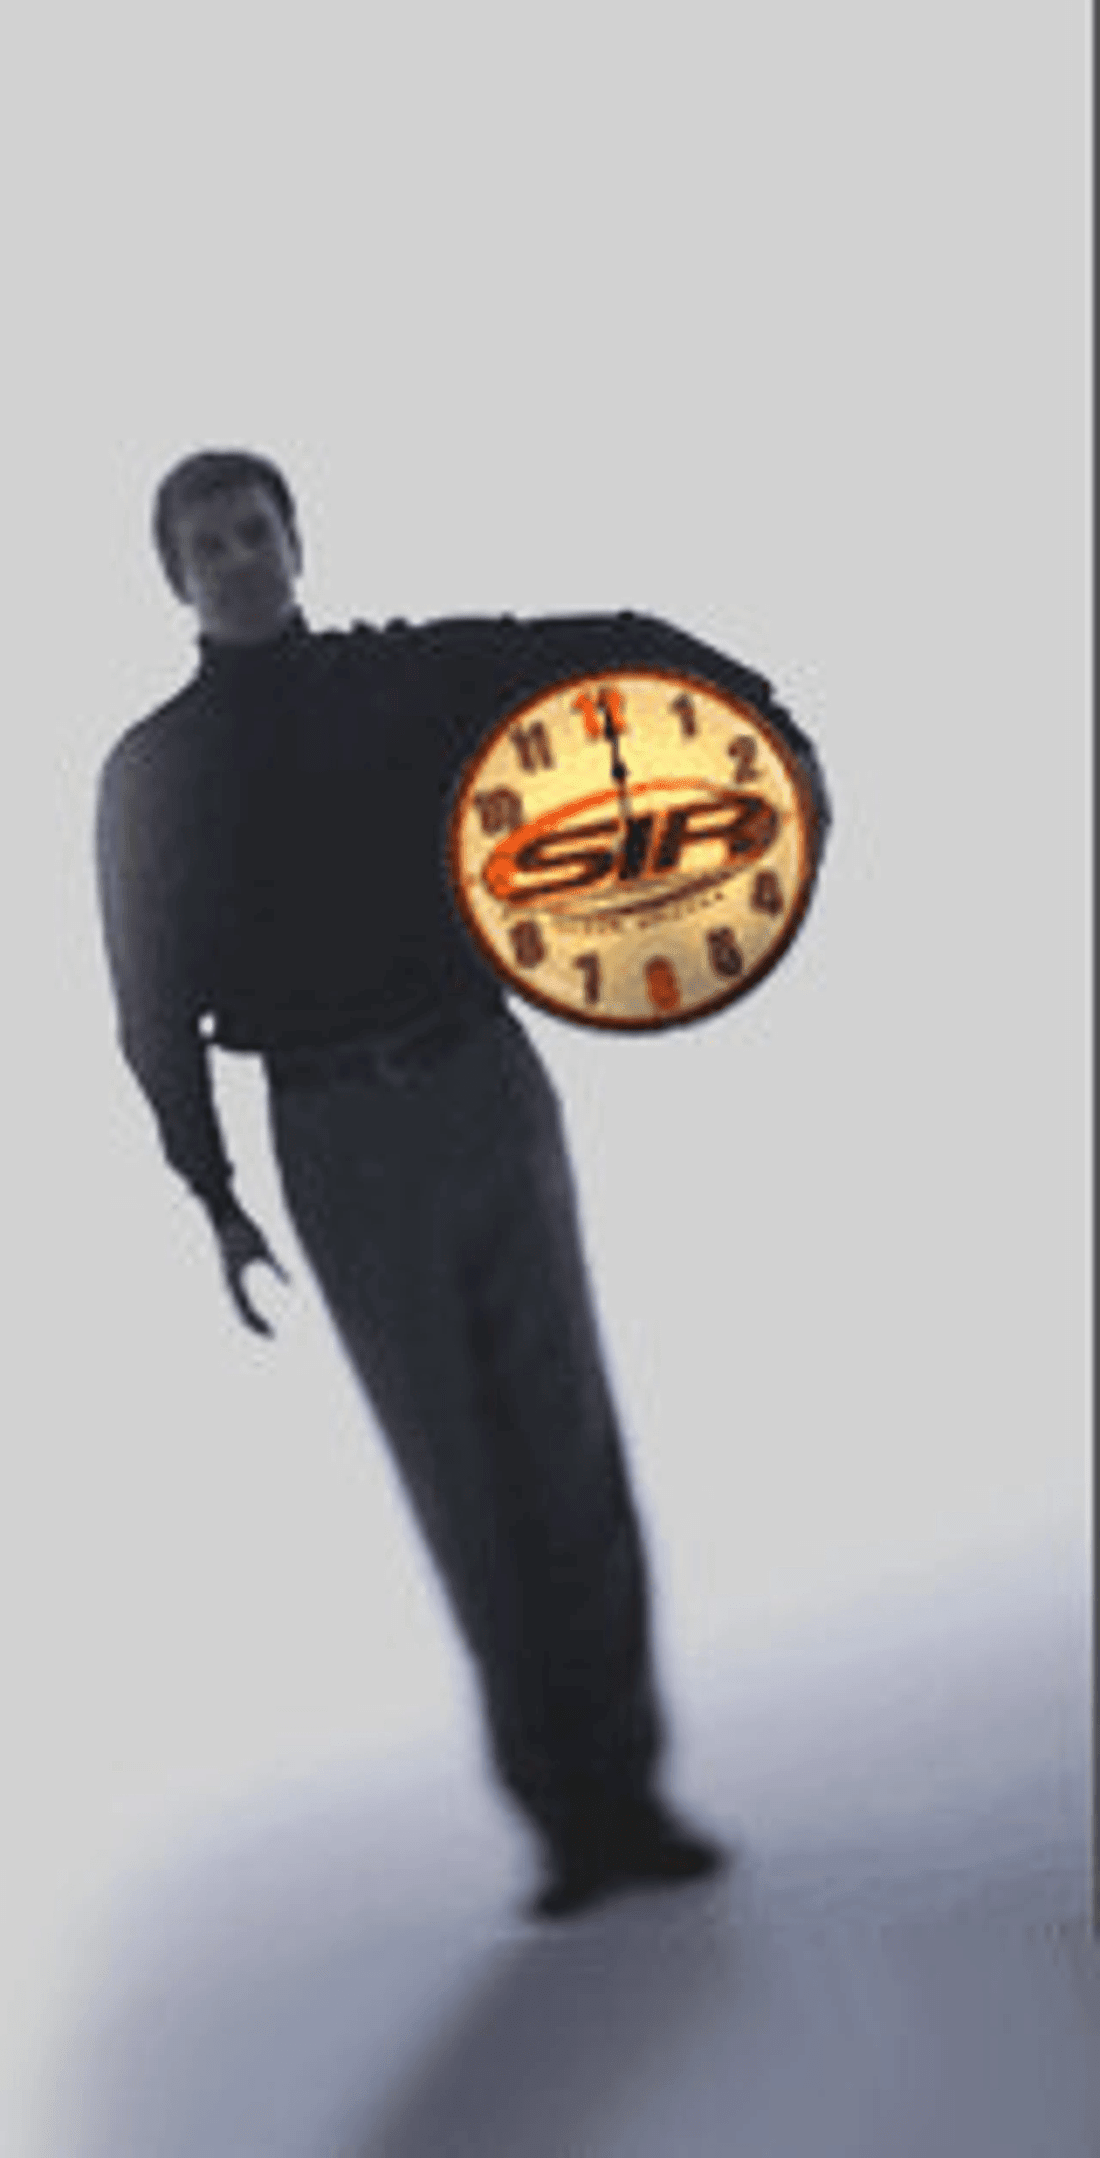 Santa Fe Chief Railroad Backlit Lighted Advertising Sign Clock Vintage Style Retro Auto Gas Oil Garage Art 20710097